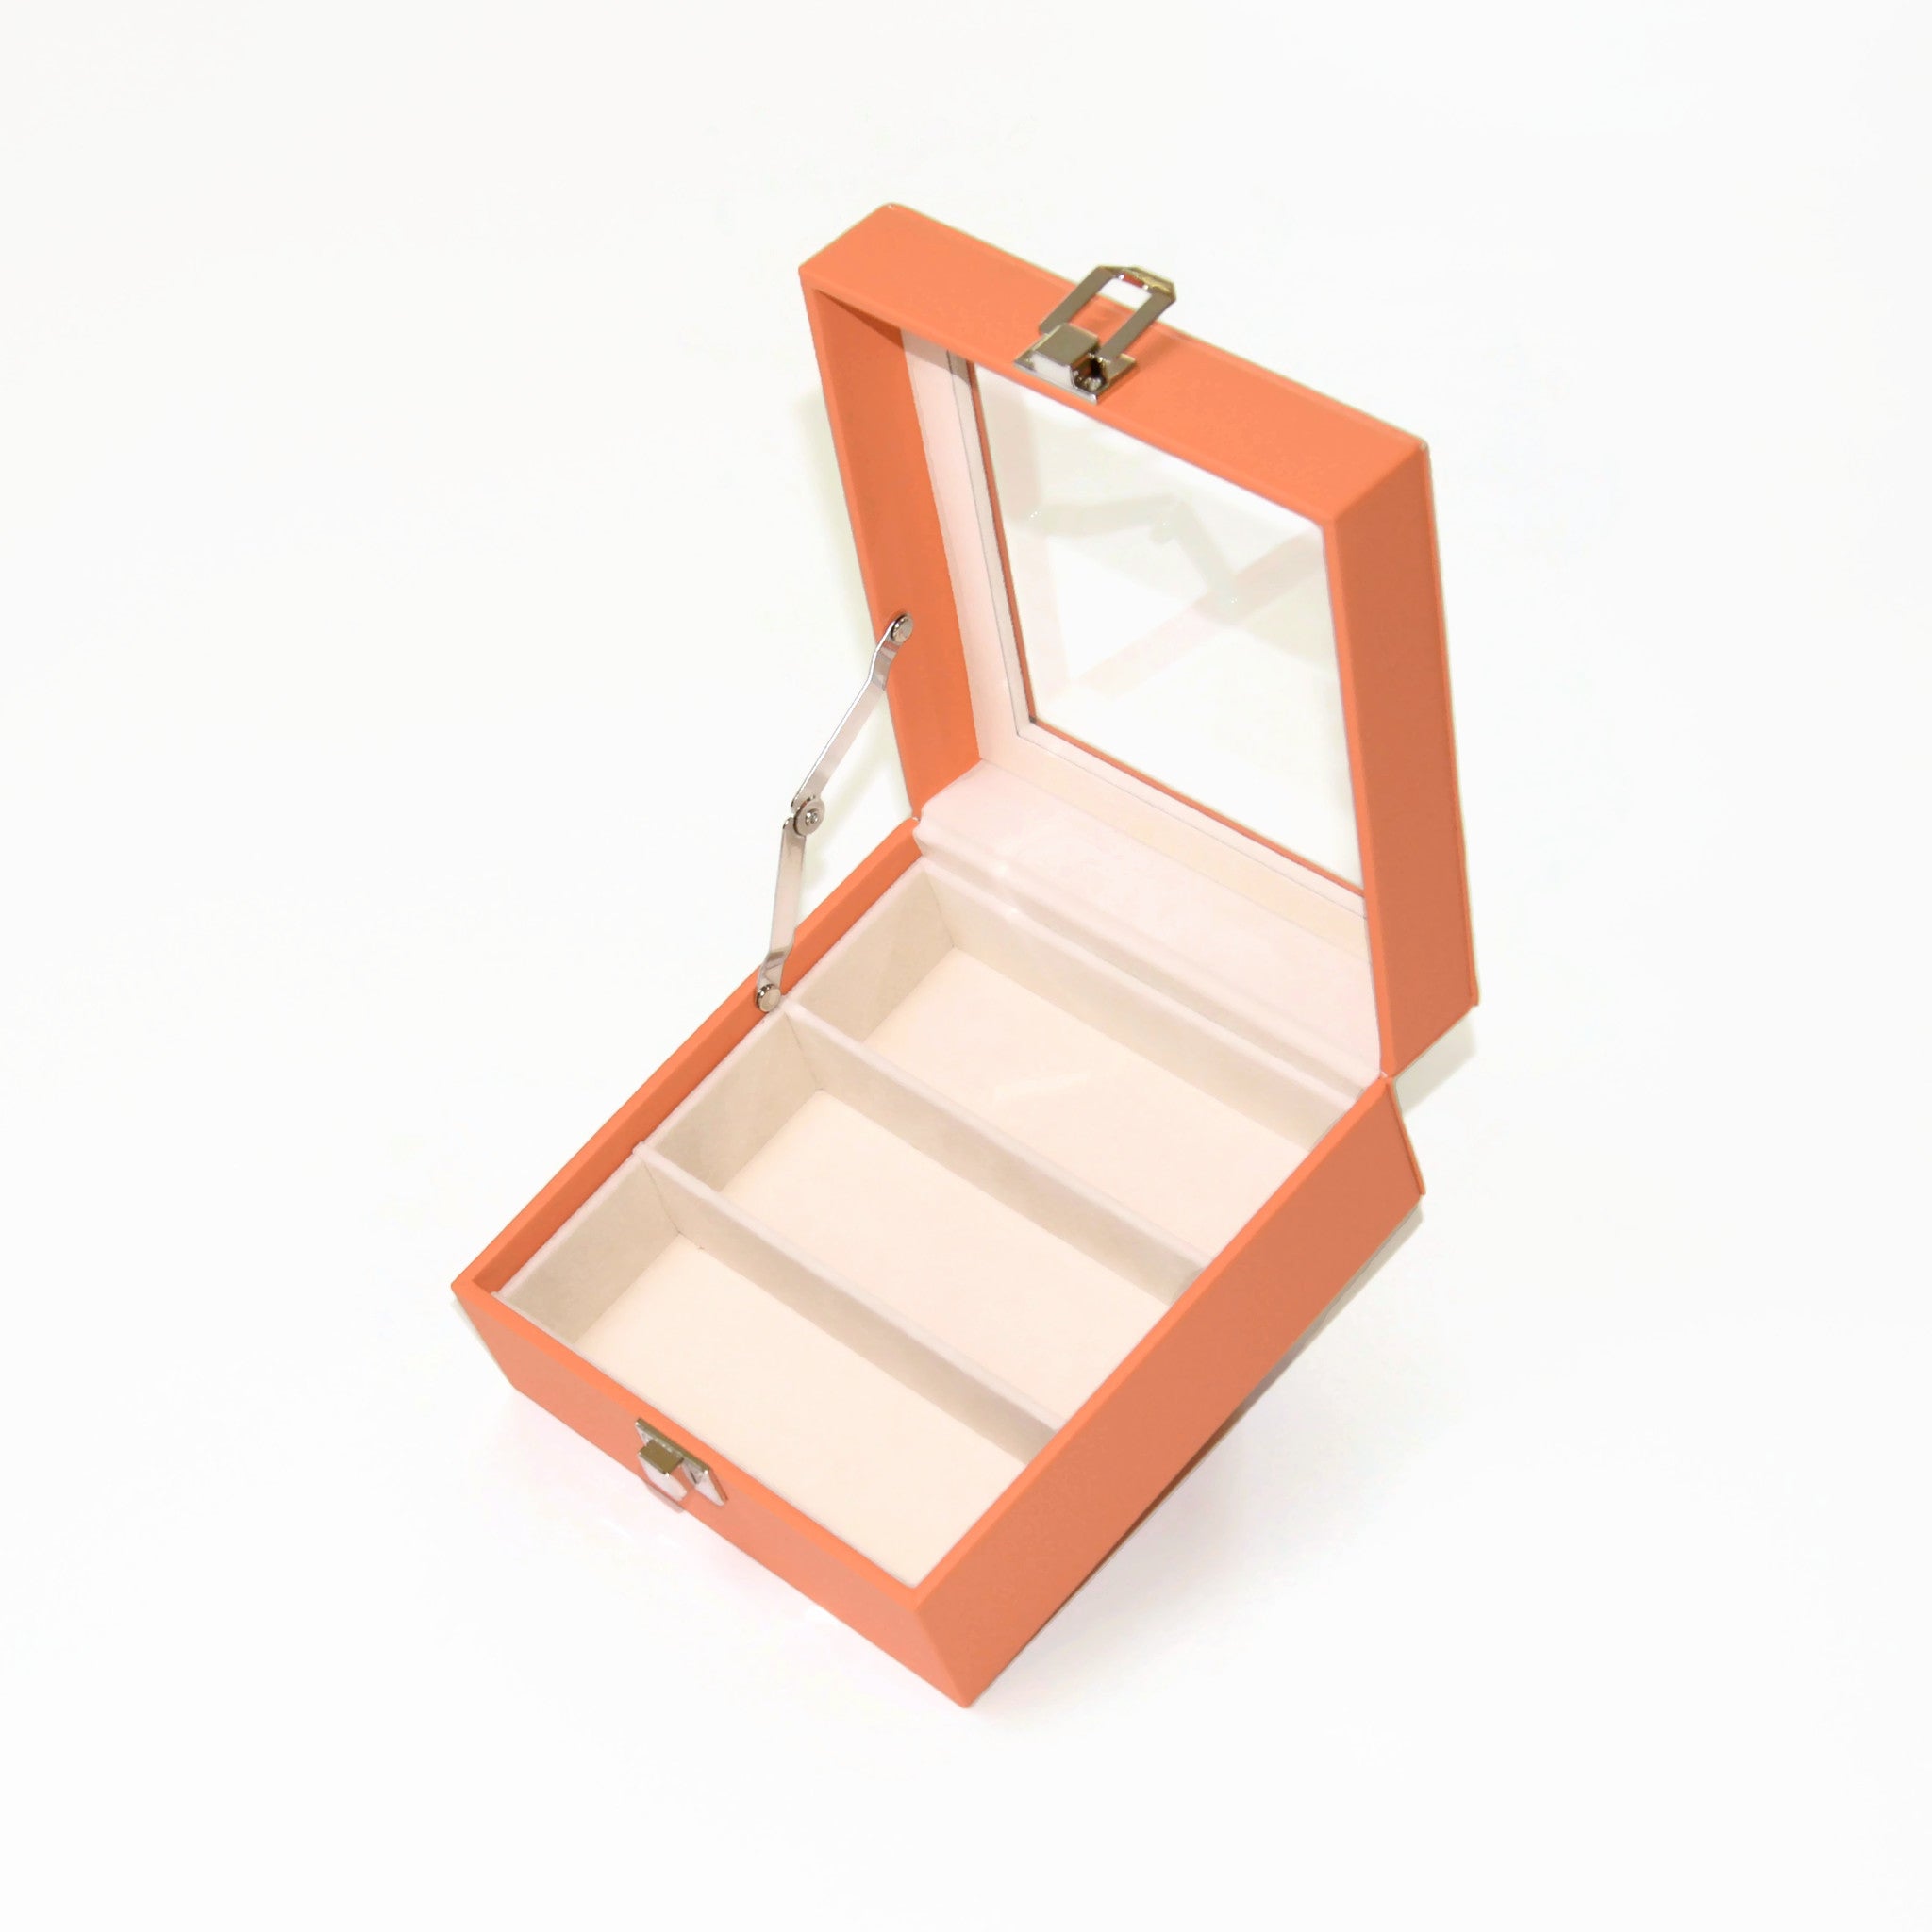 3 pc Eyewear Wardrobe Case with Latch - Orange Coral